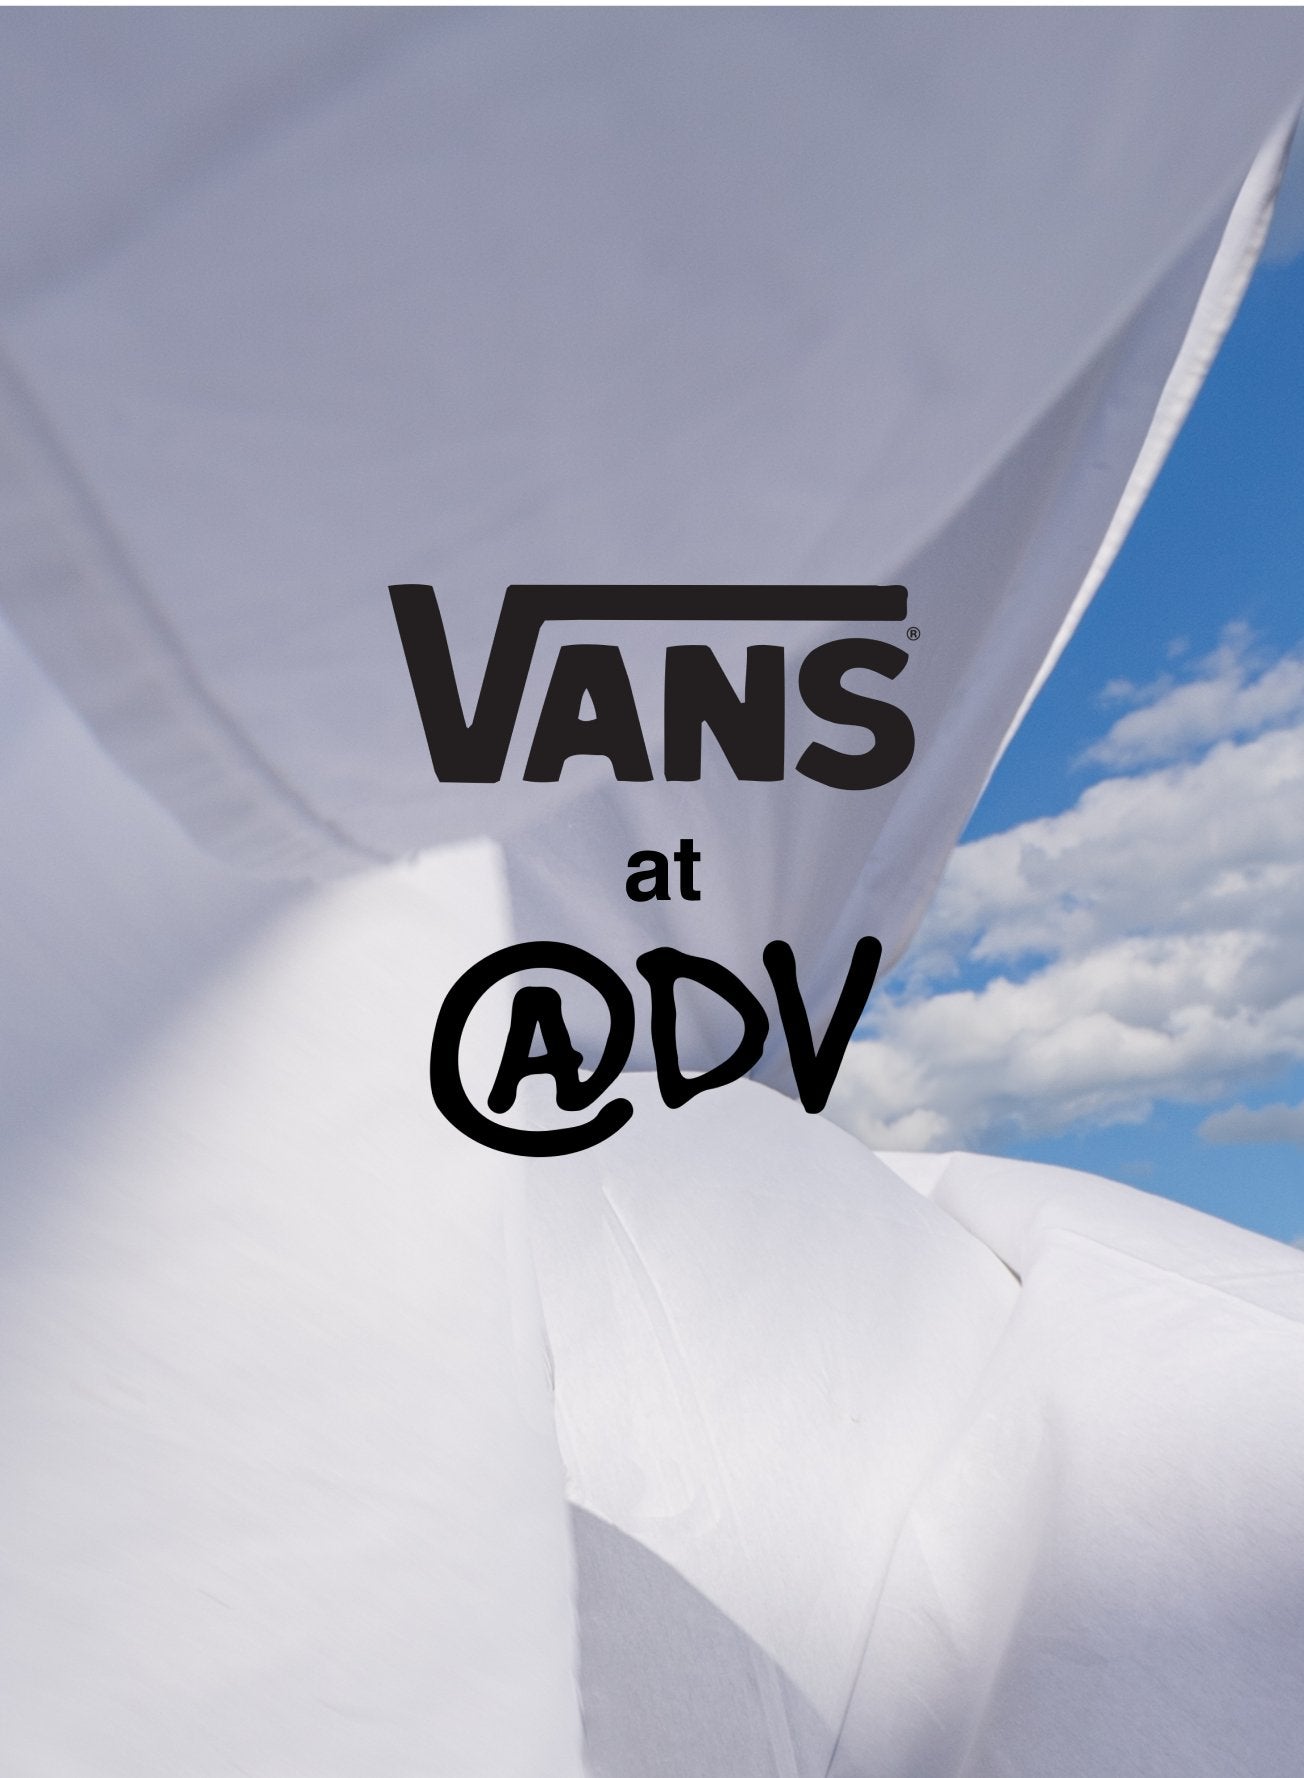 Vans Summer Campaign - @dv